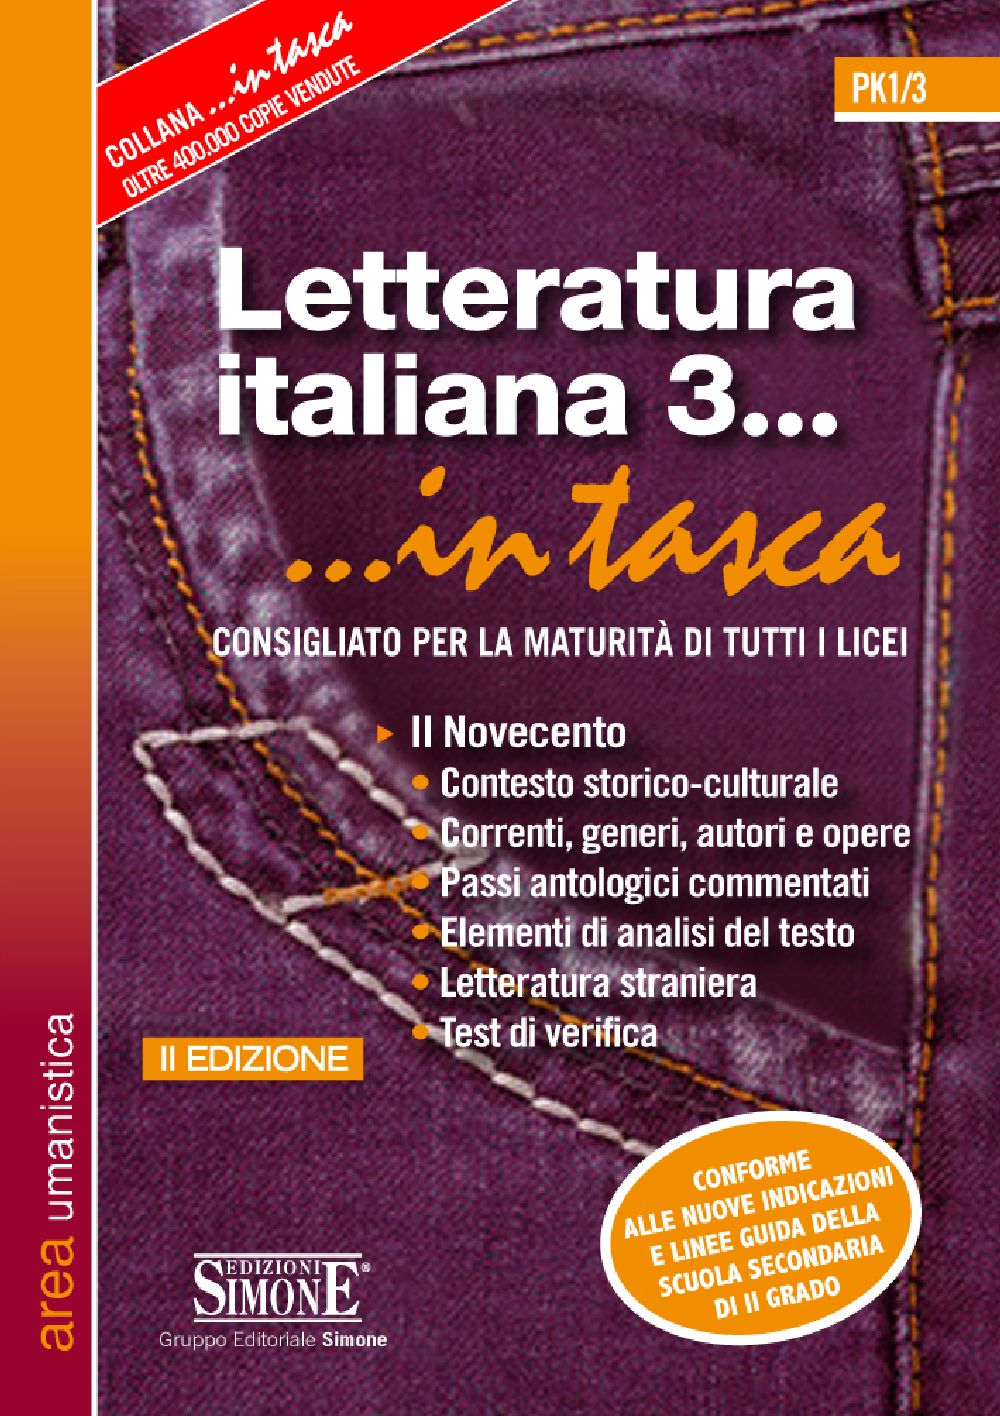 Letteratura italiana 3... in tasca - PK1/3